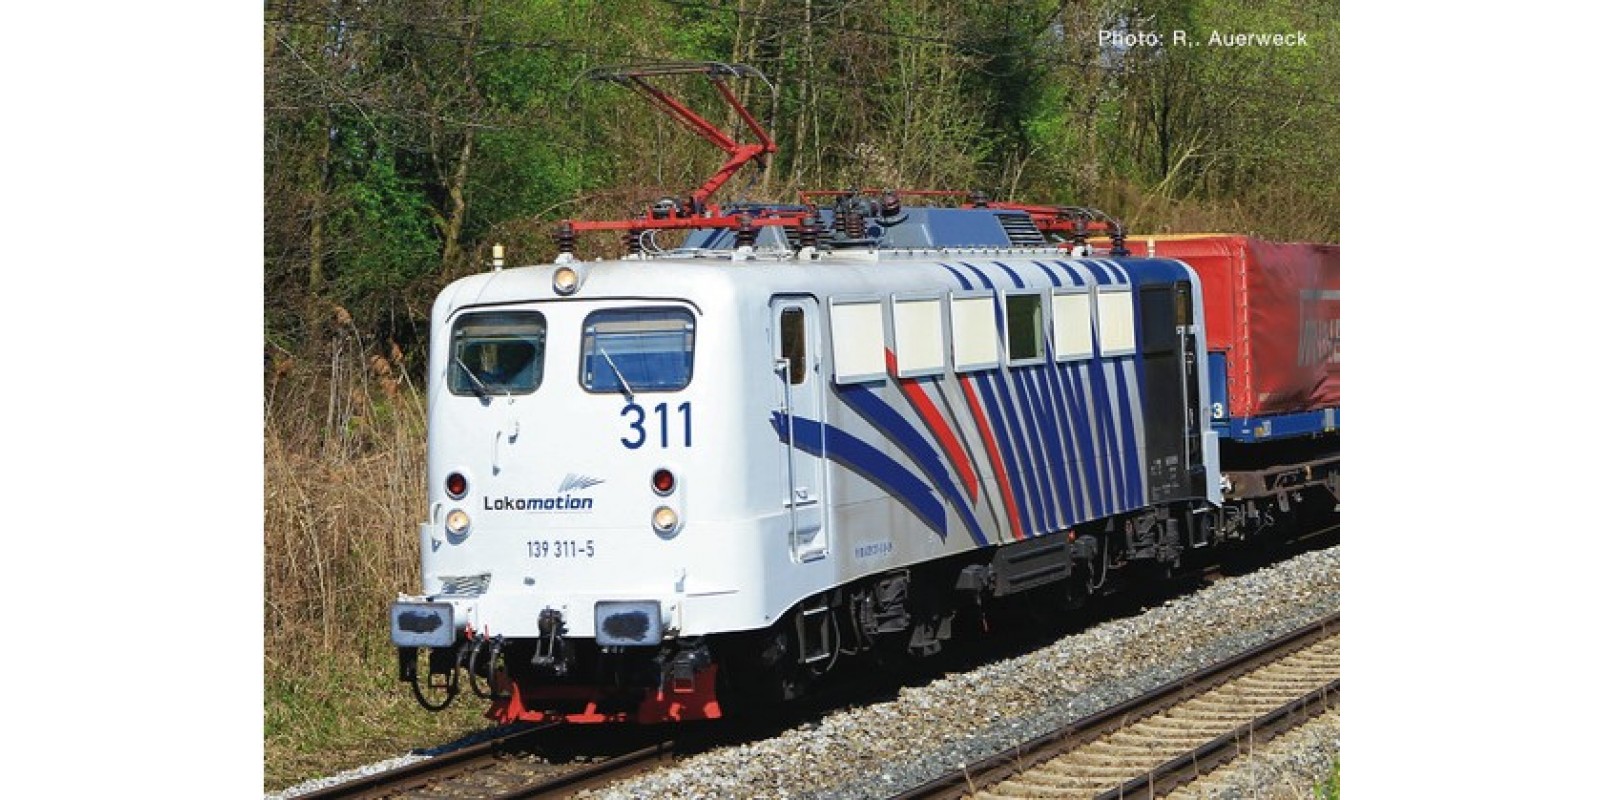 RO79585 - Electric locomotive 139 311-5, Lokomotion